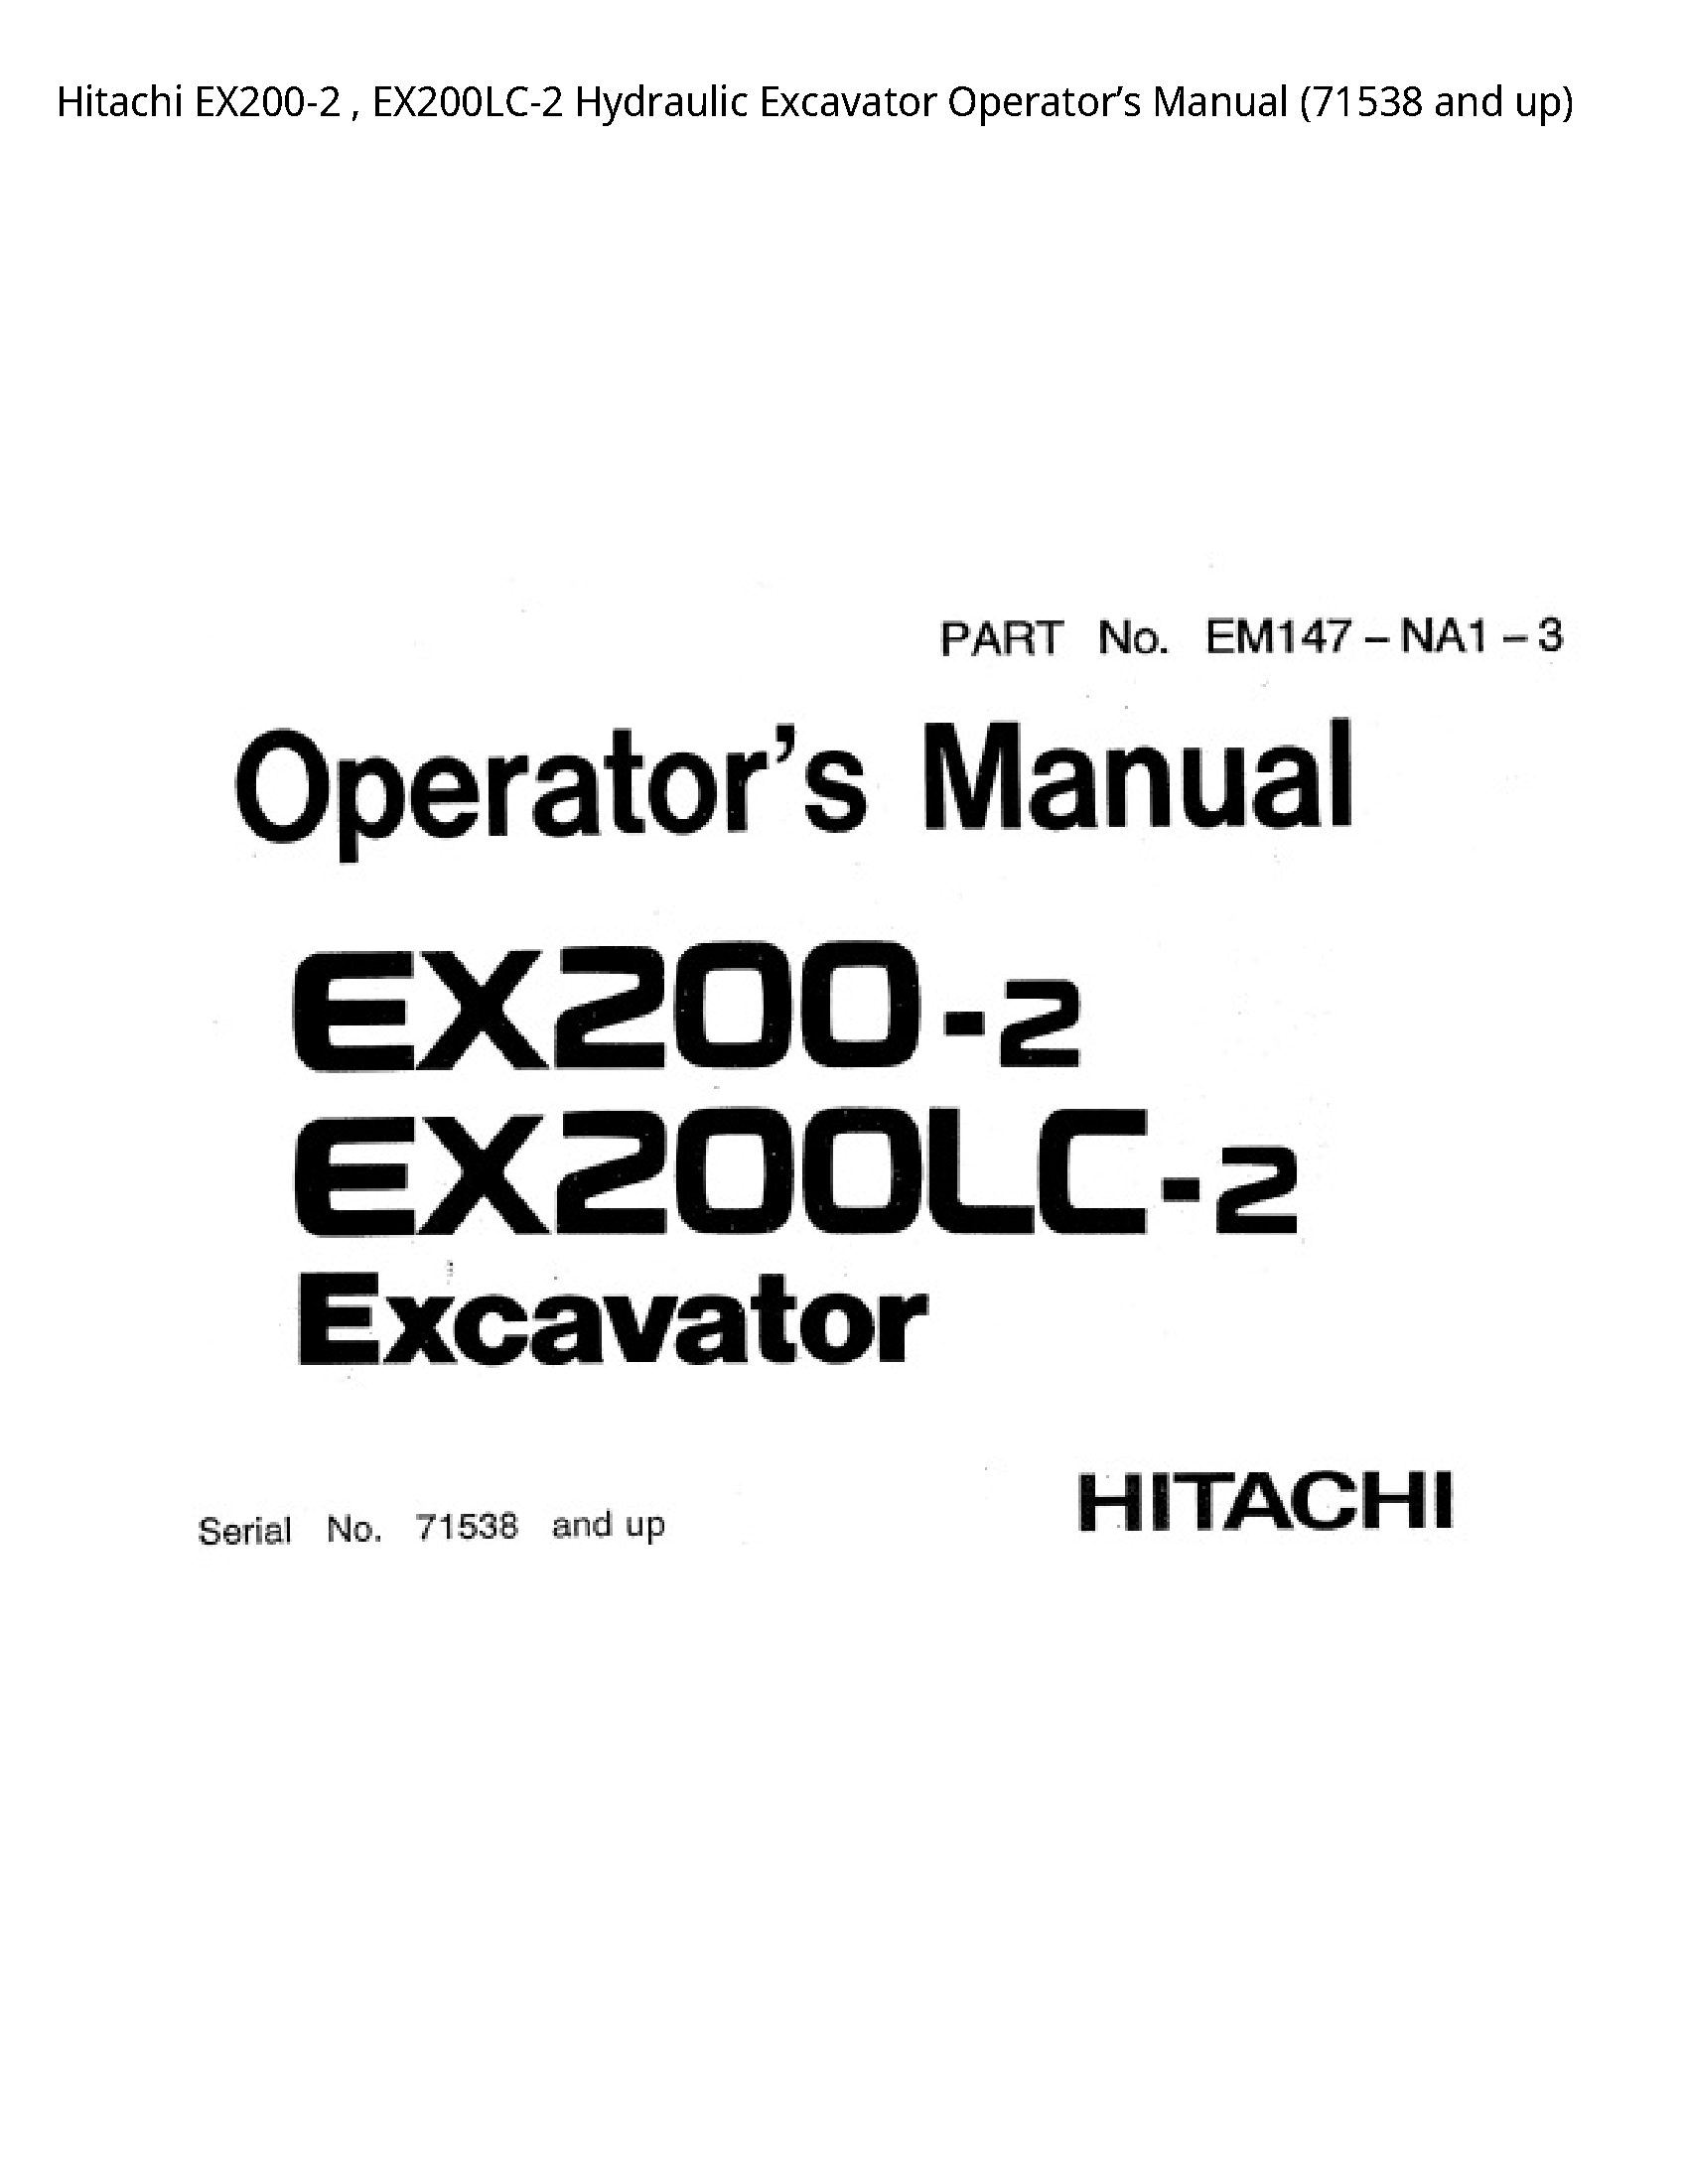 Hitachi EX200-2 Hydraulic Excavator Operator’s manual